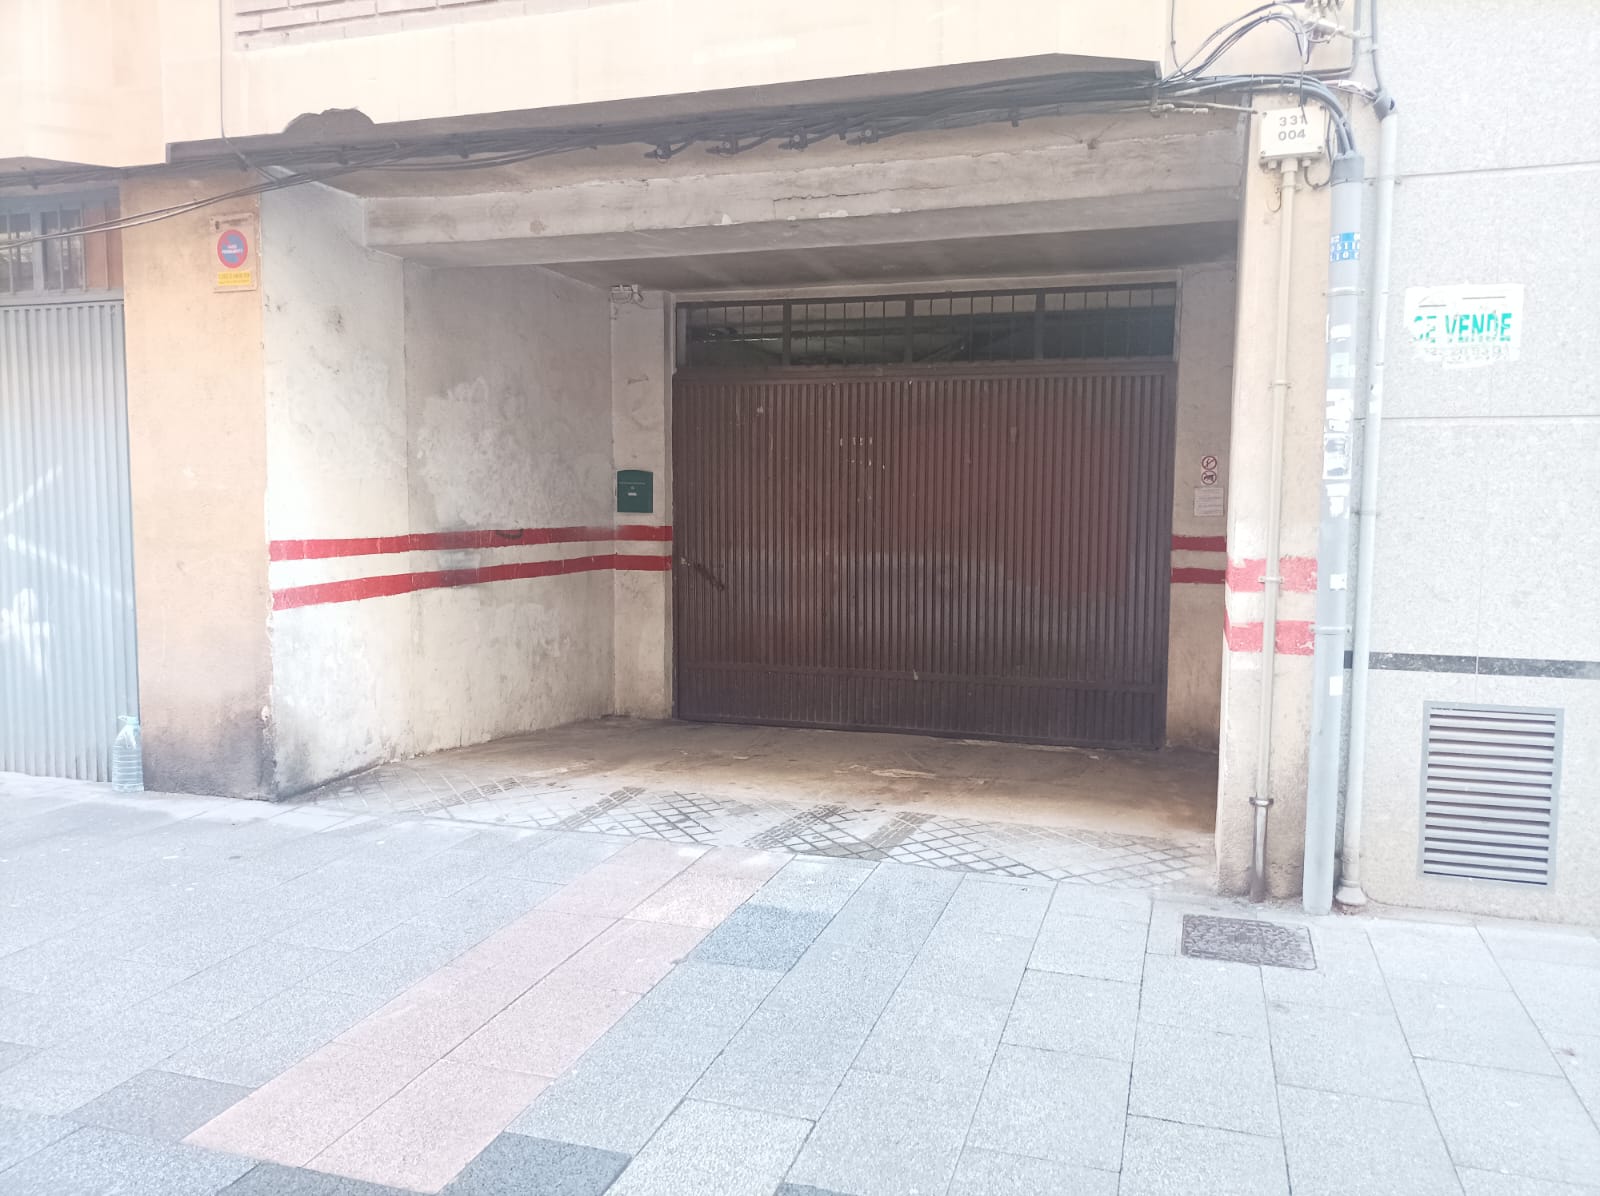 For sale of garage in Salamanca